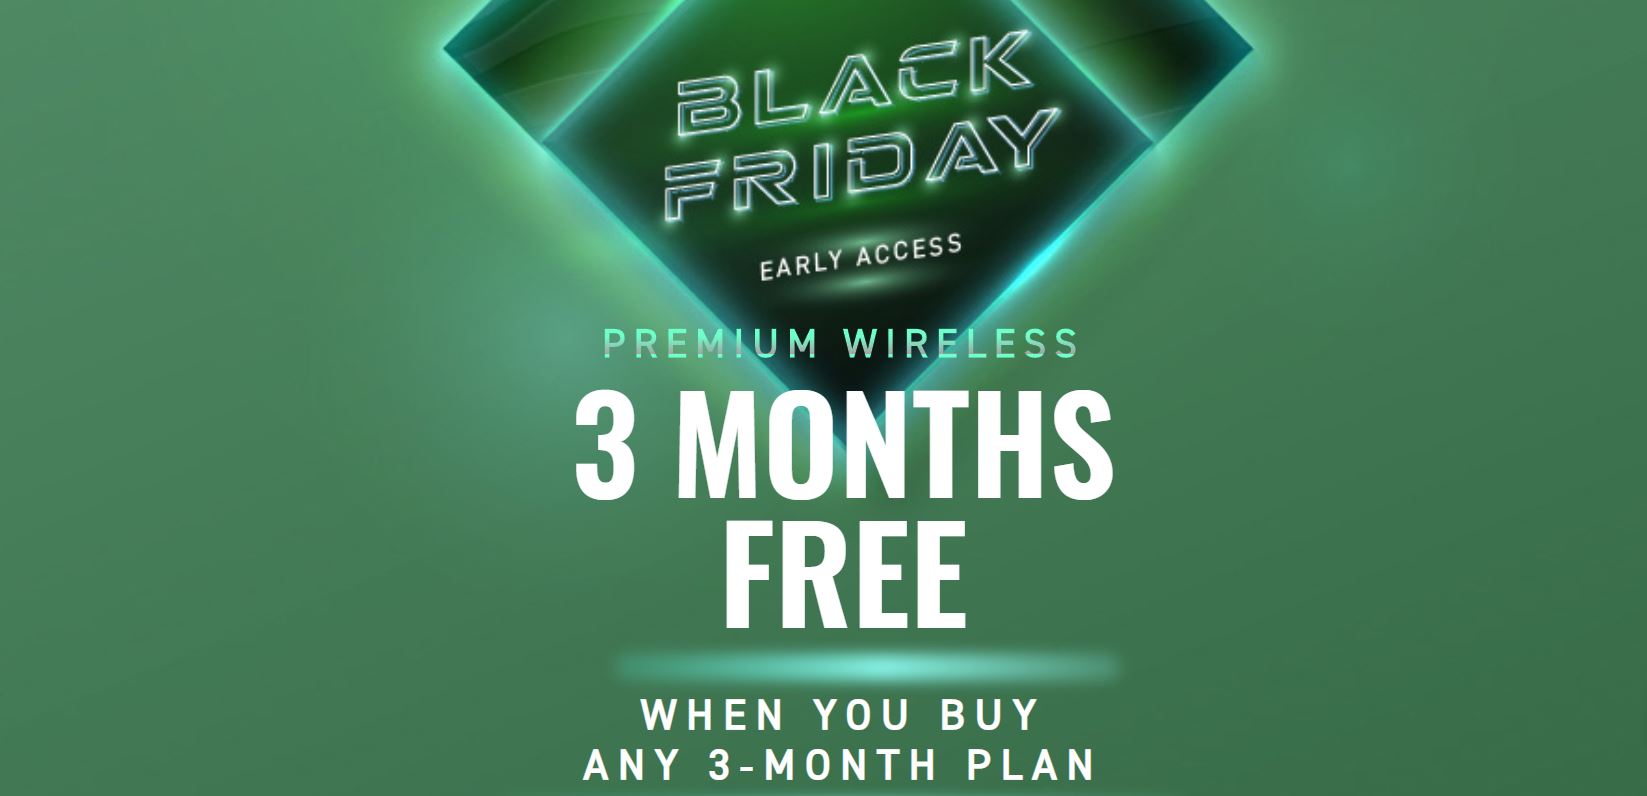 Mint Mobile Black Friday Deal